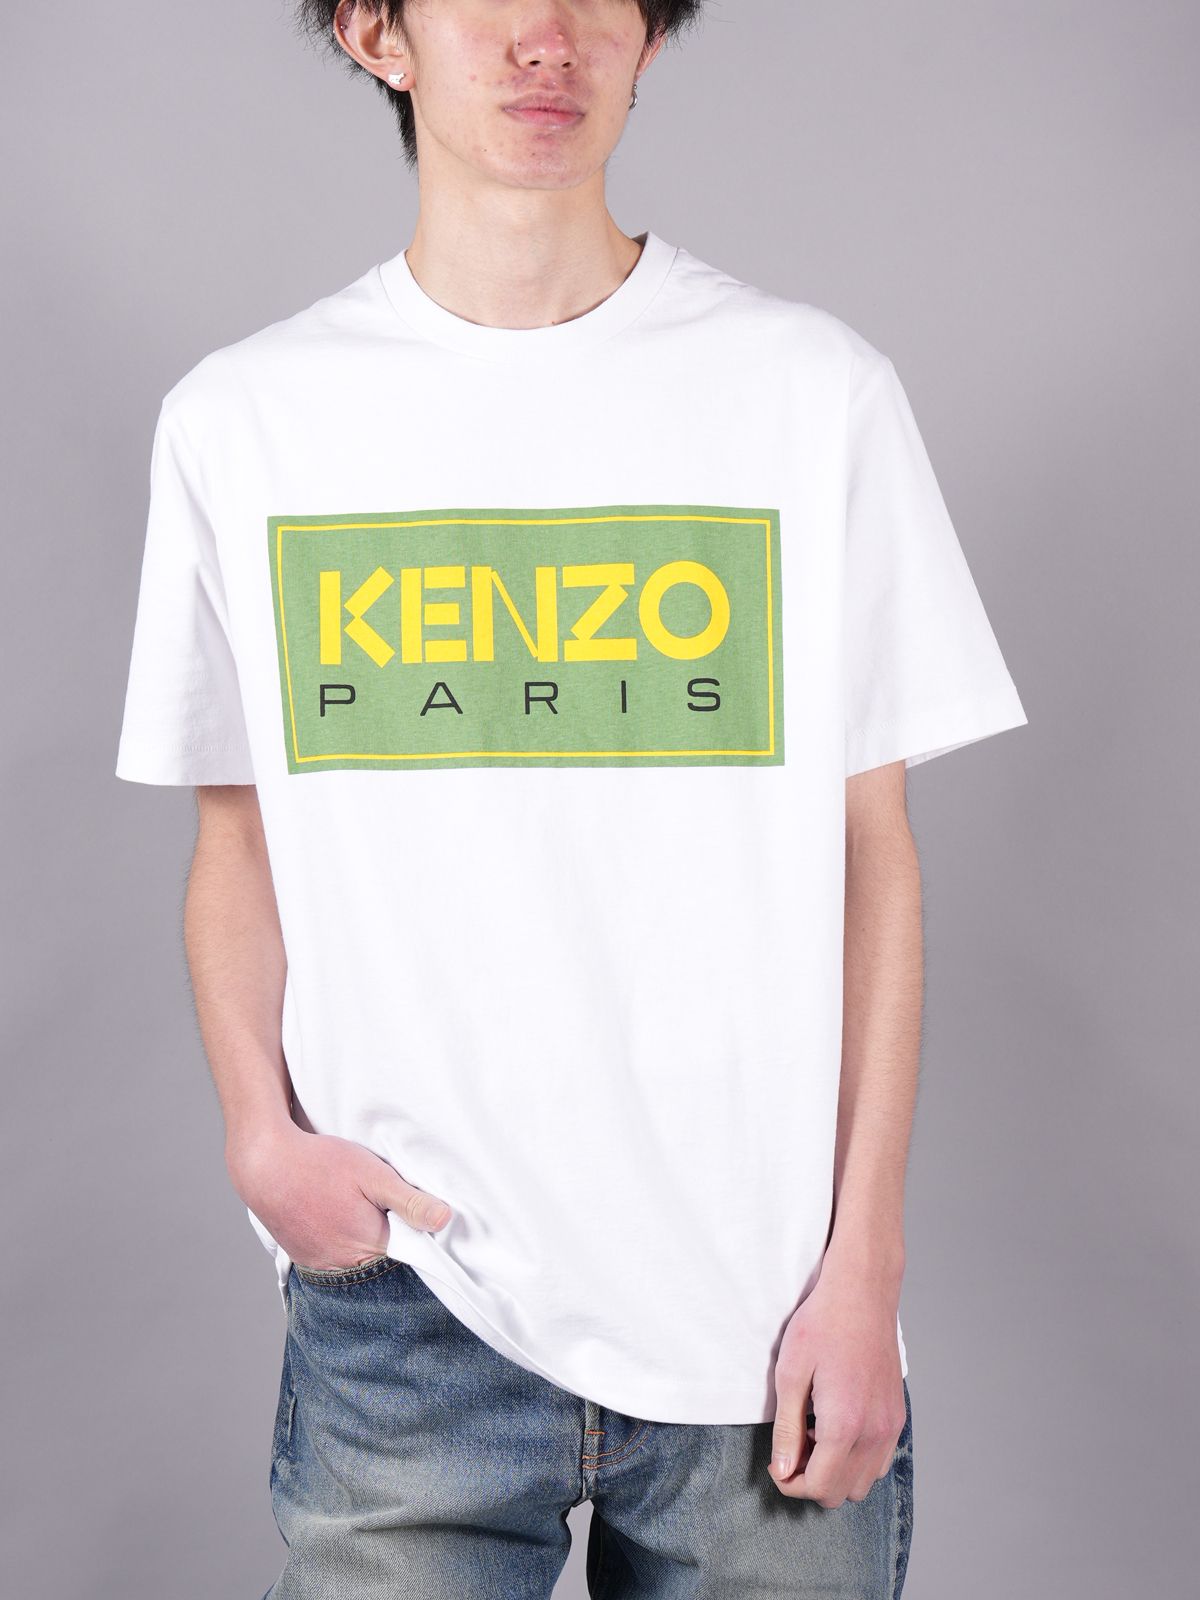 KENZO - Tricolor Kenzo Paris Tee / ケンゾー パリ クラシック T